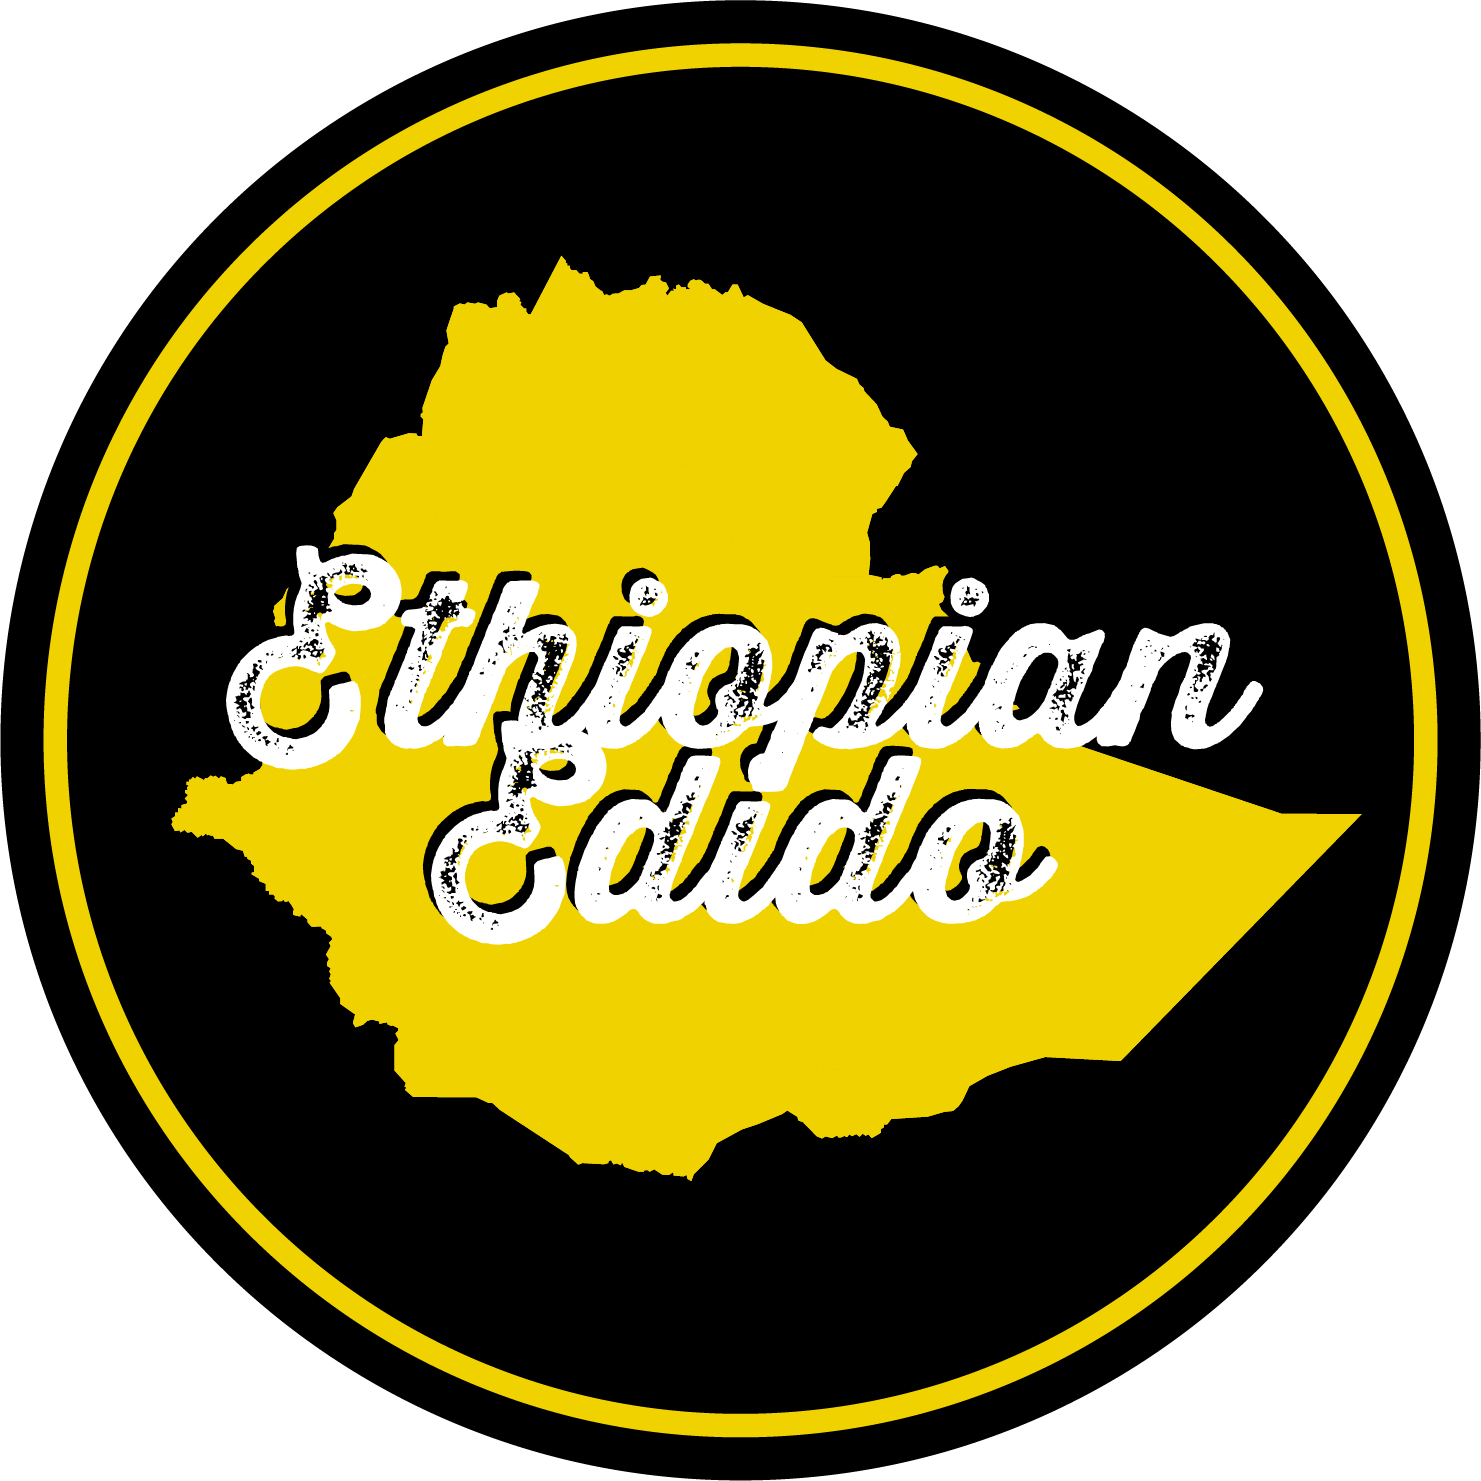 Ethiopia Edido